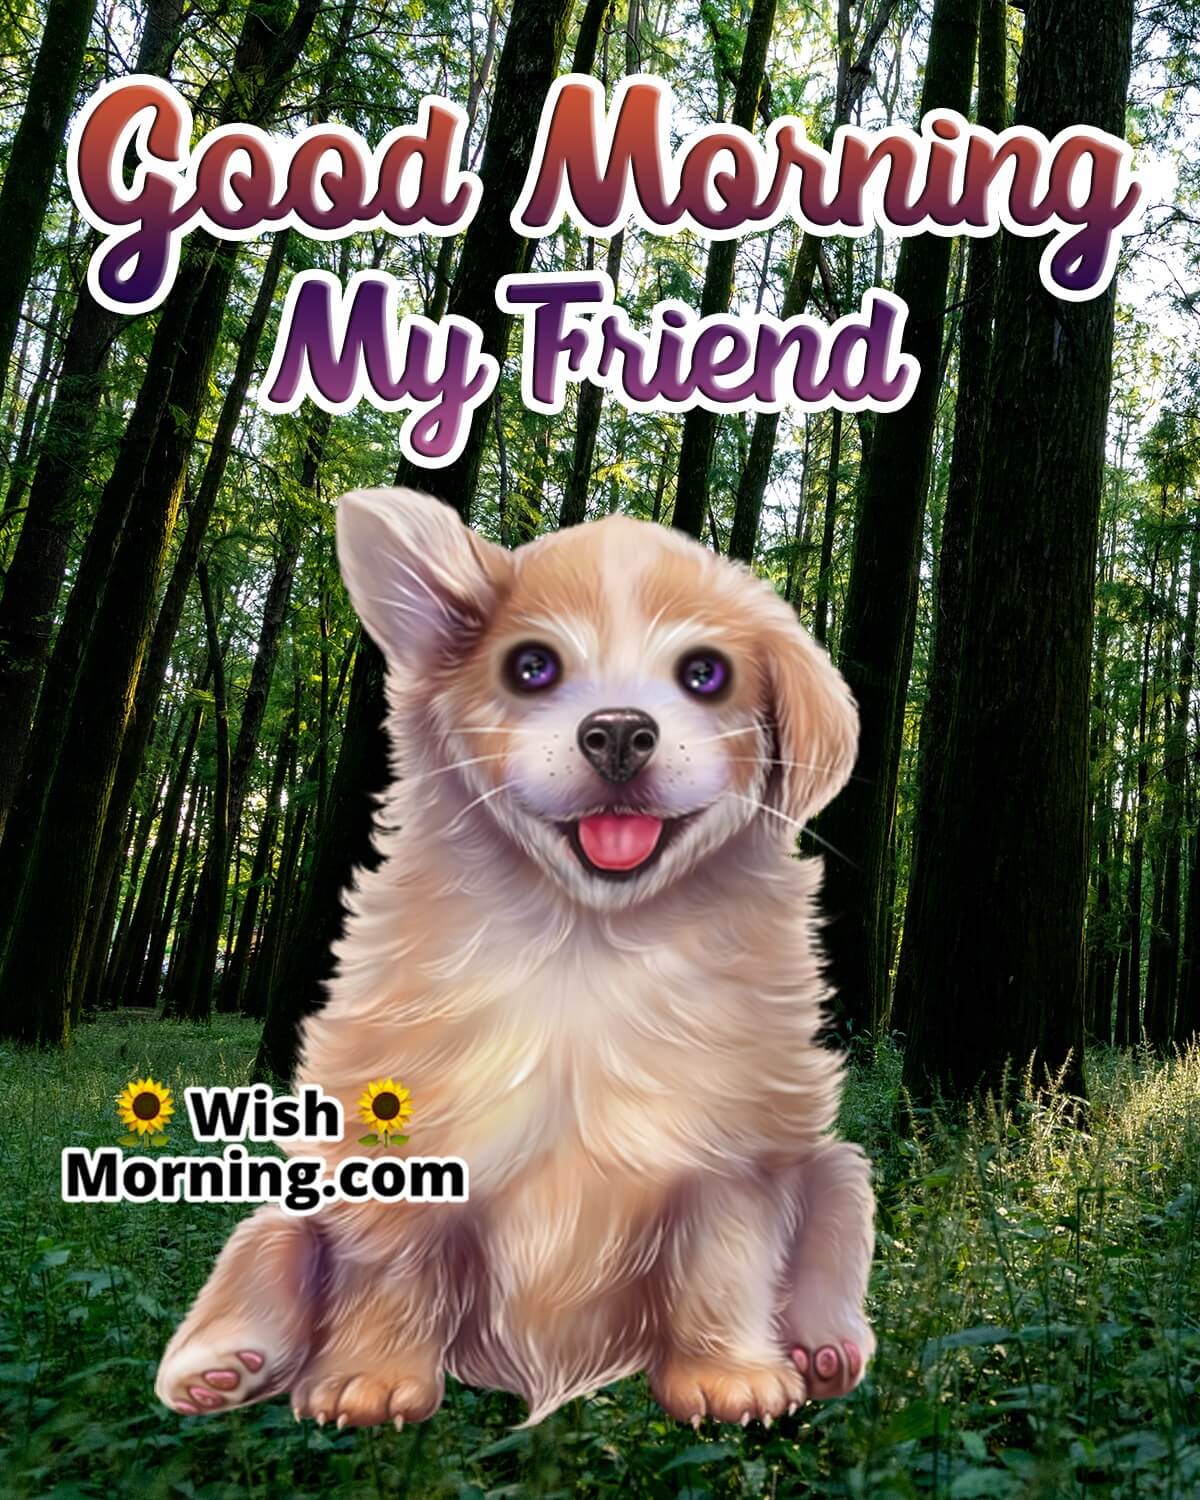 Good Morning My Friend Dog Image